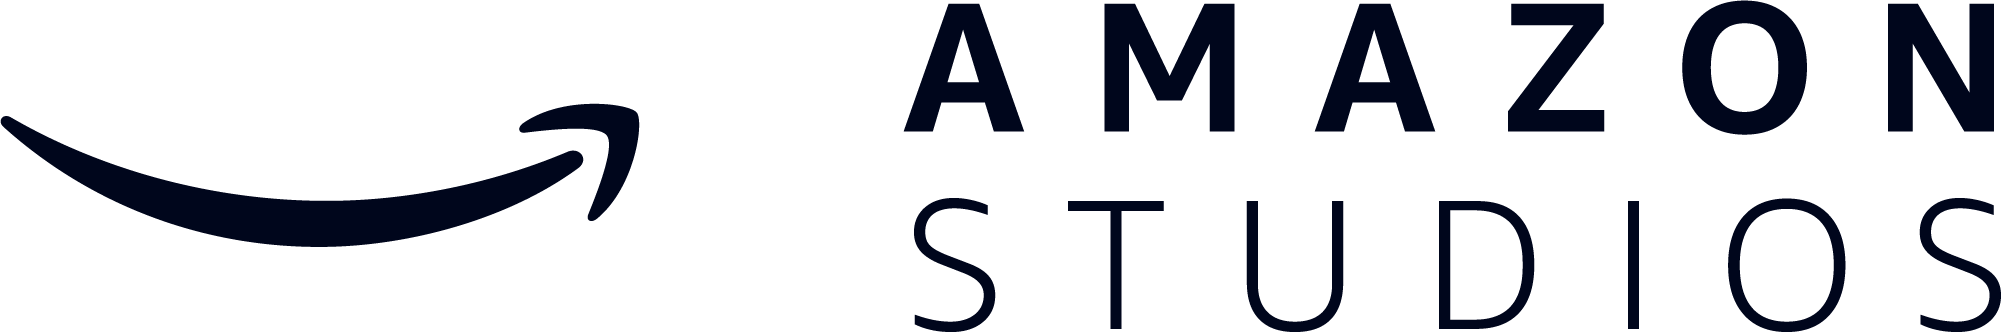 Amazon Studios Logo